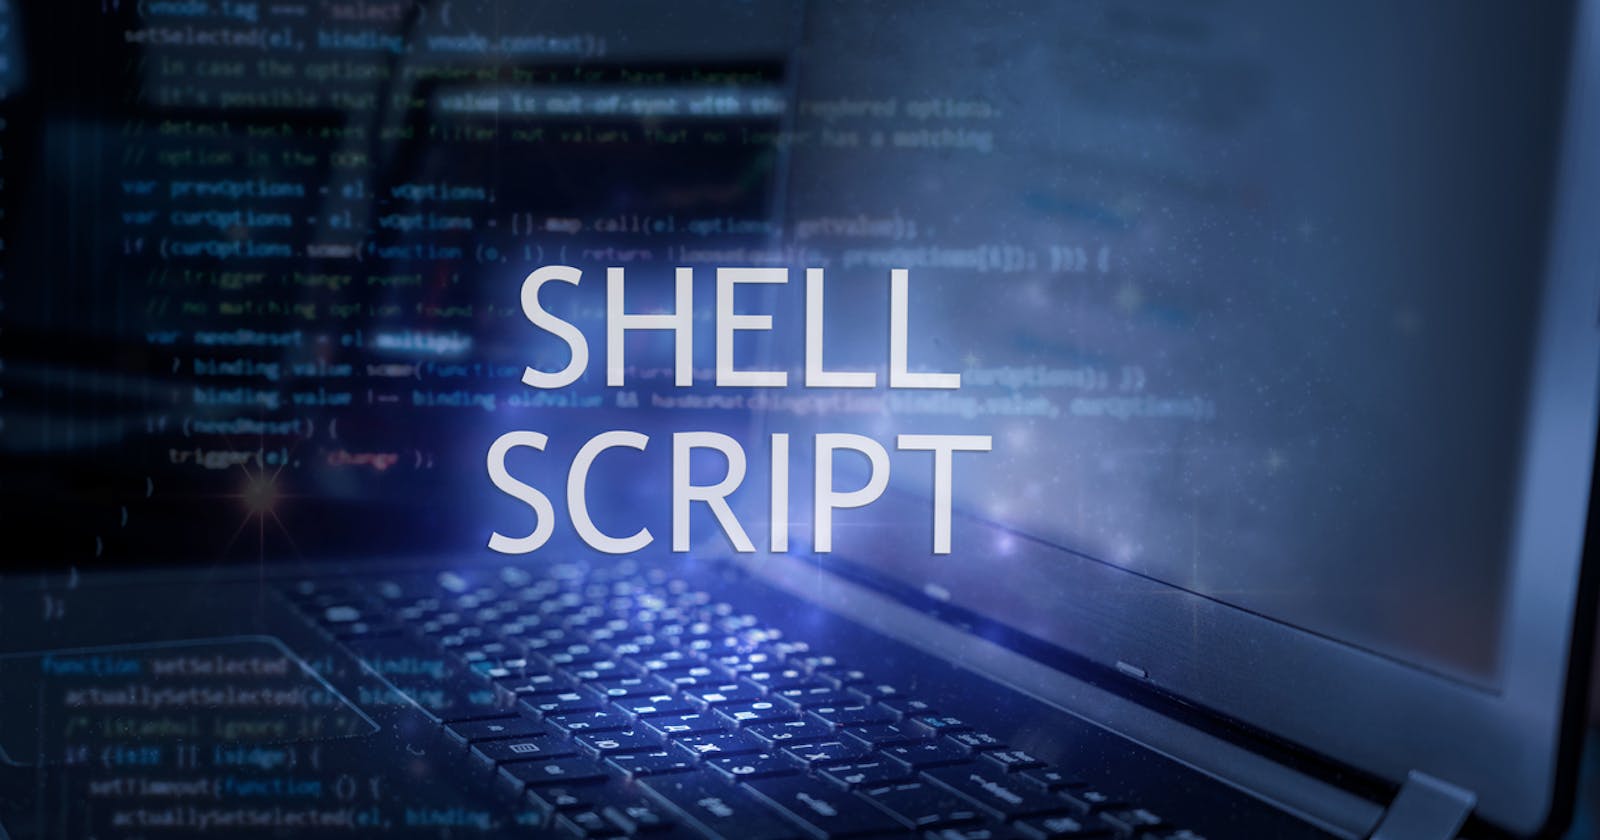 Exit Status ($?) in Shell Script